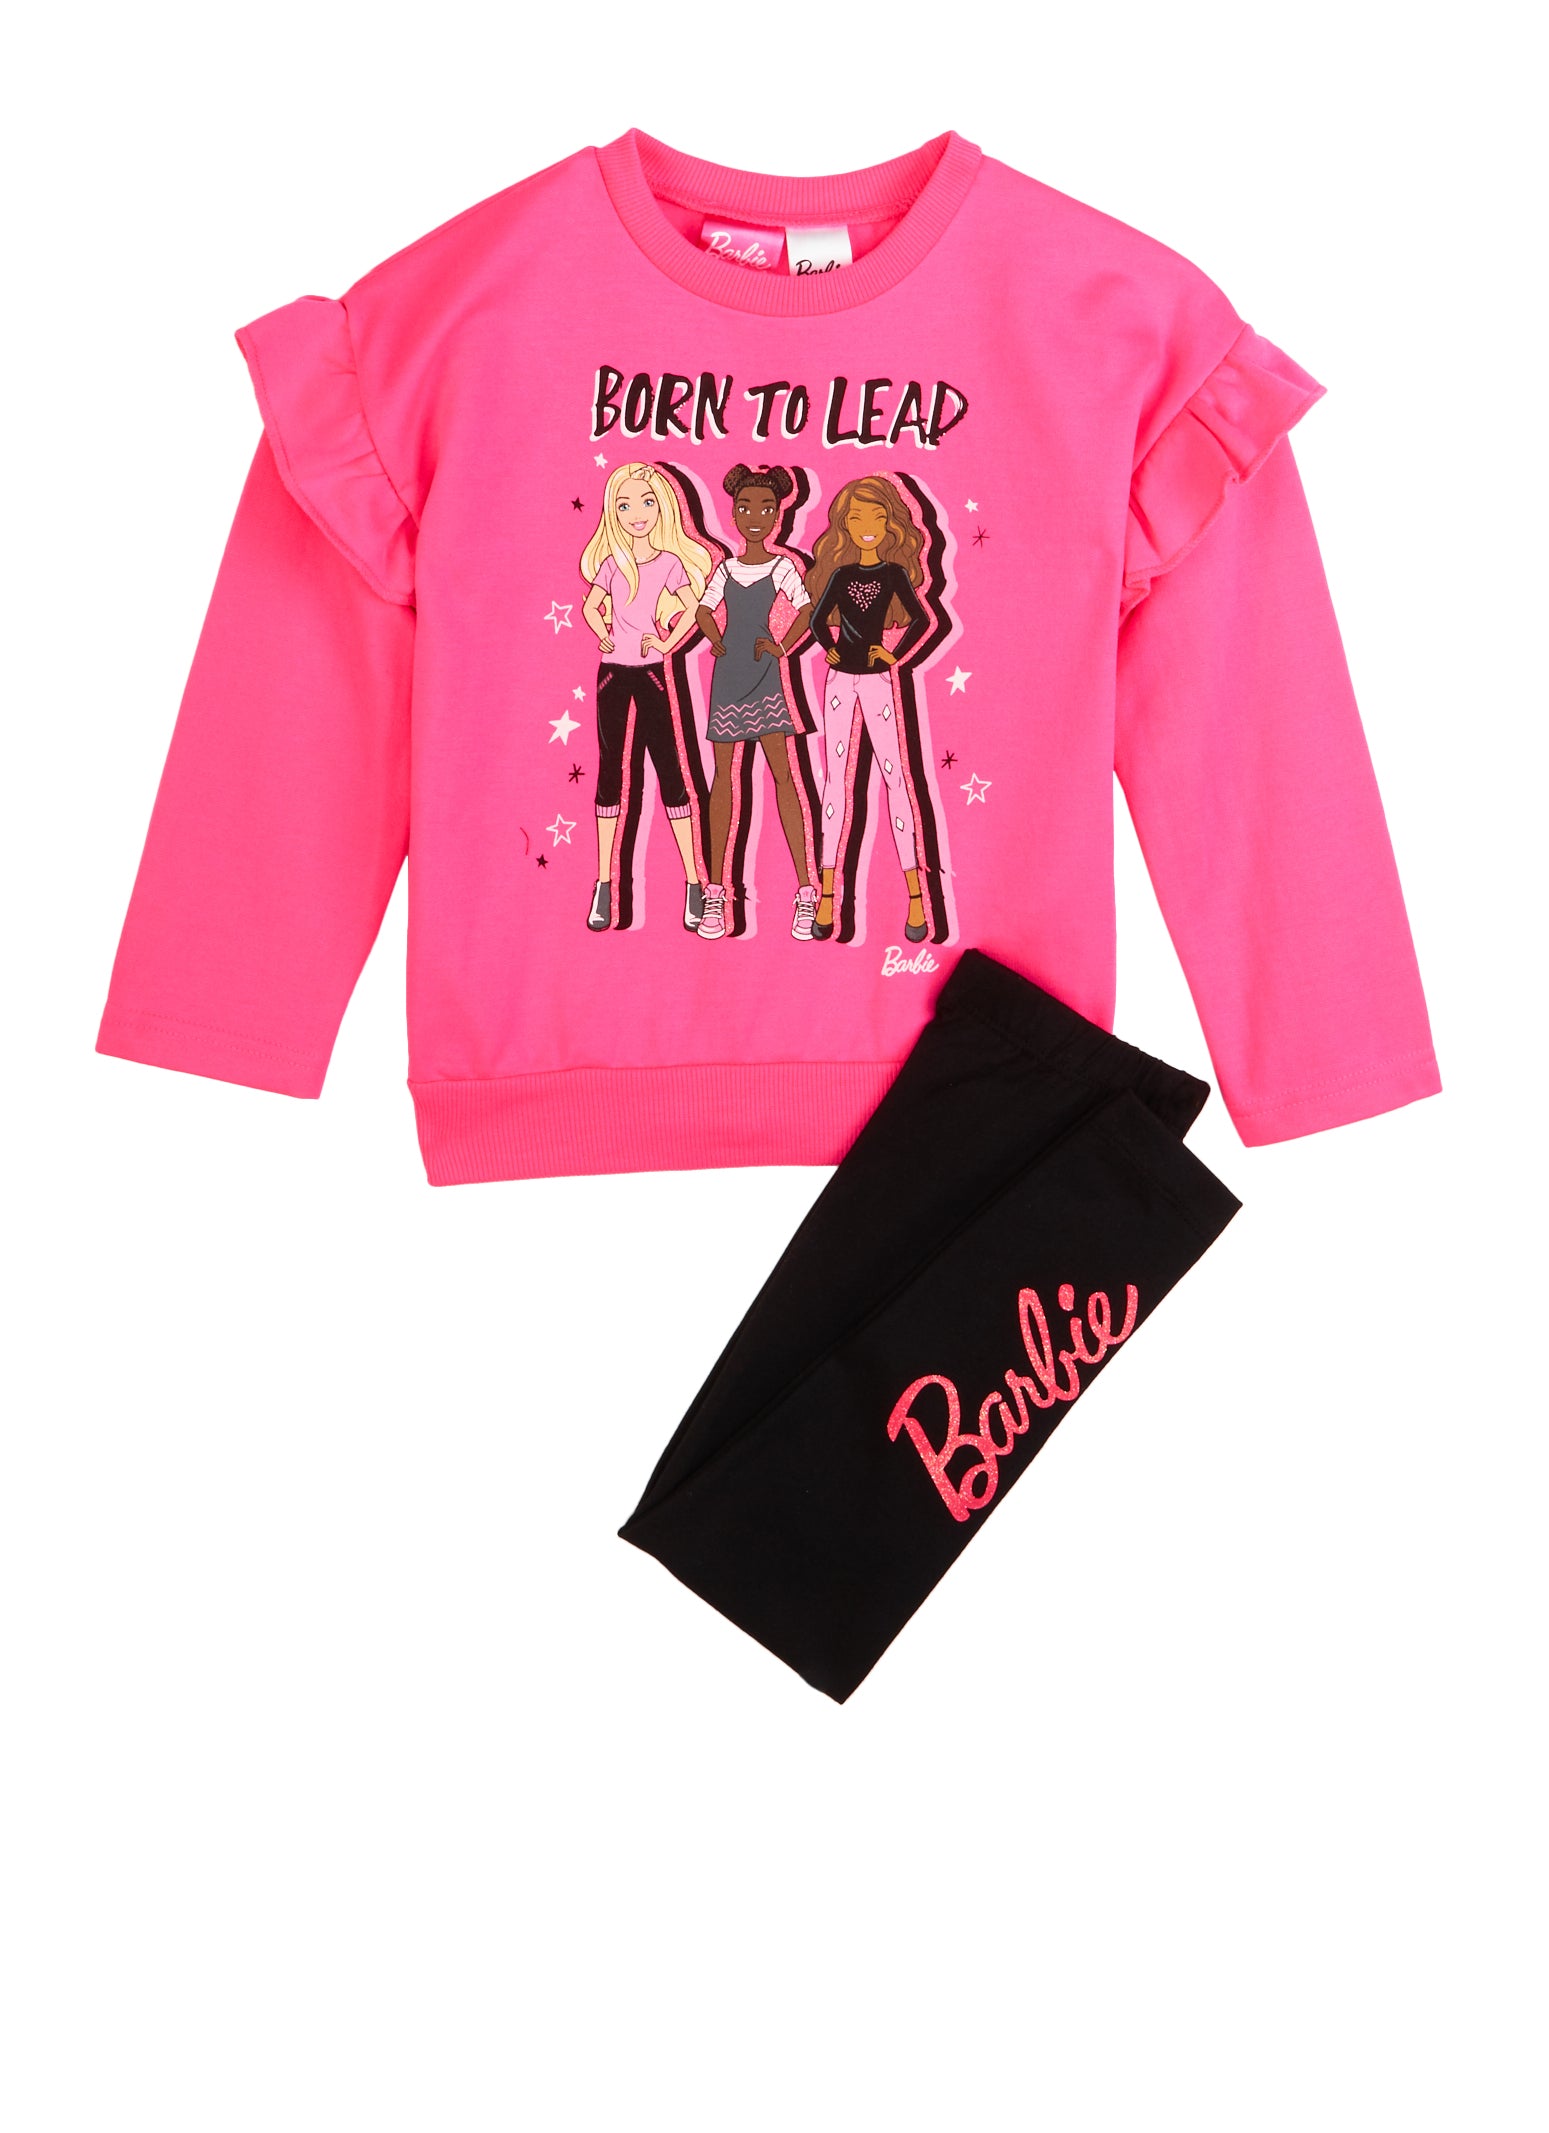 Barbie Girls T-Shirt and Leggings Set, Barbie Clothing for Girls